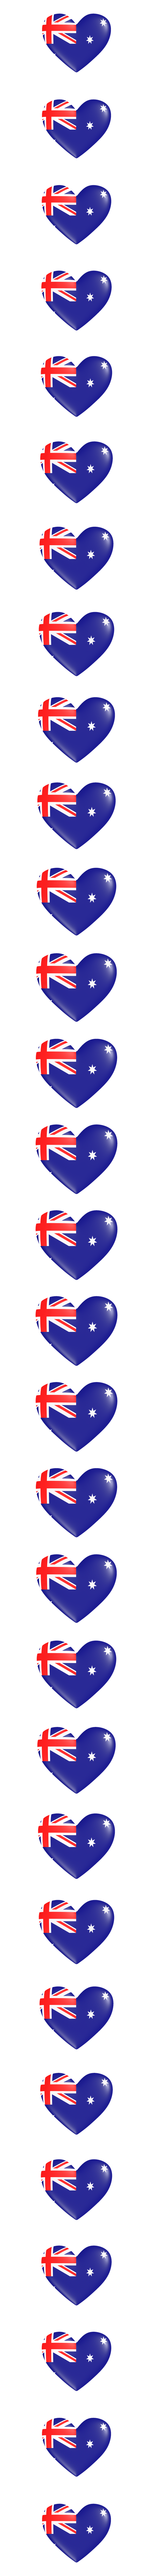 Australia heart